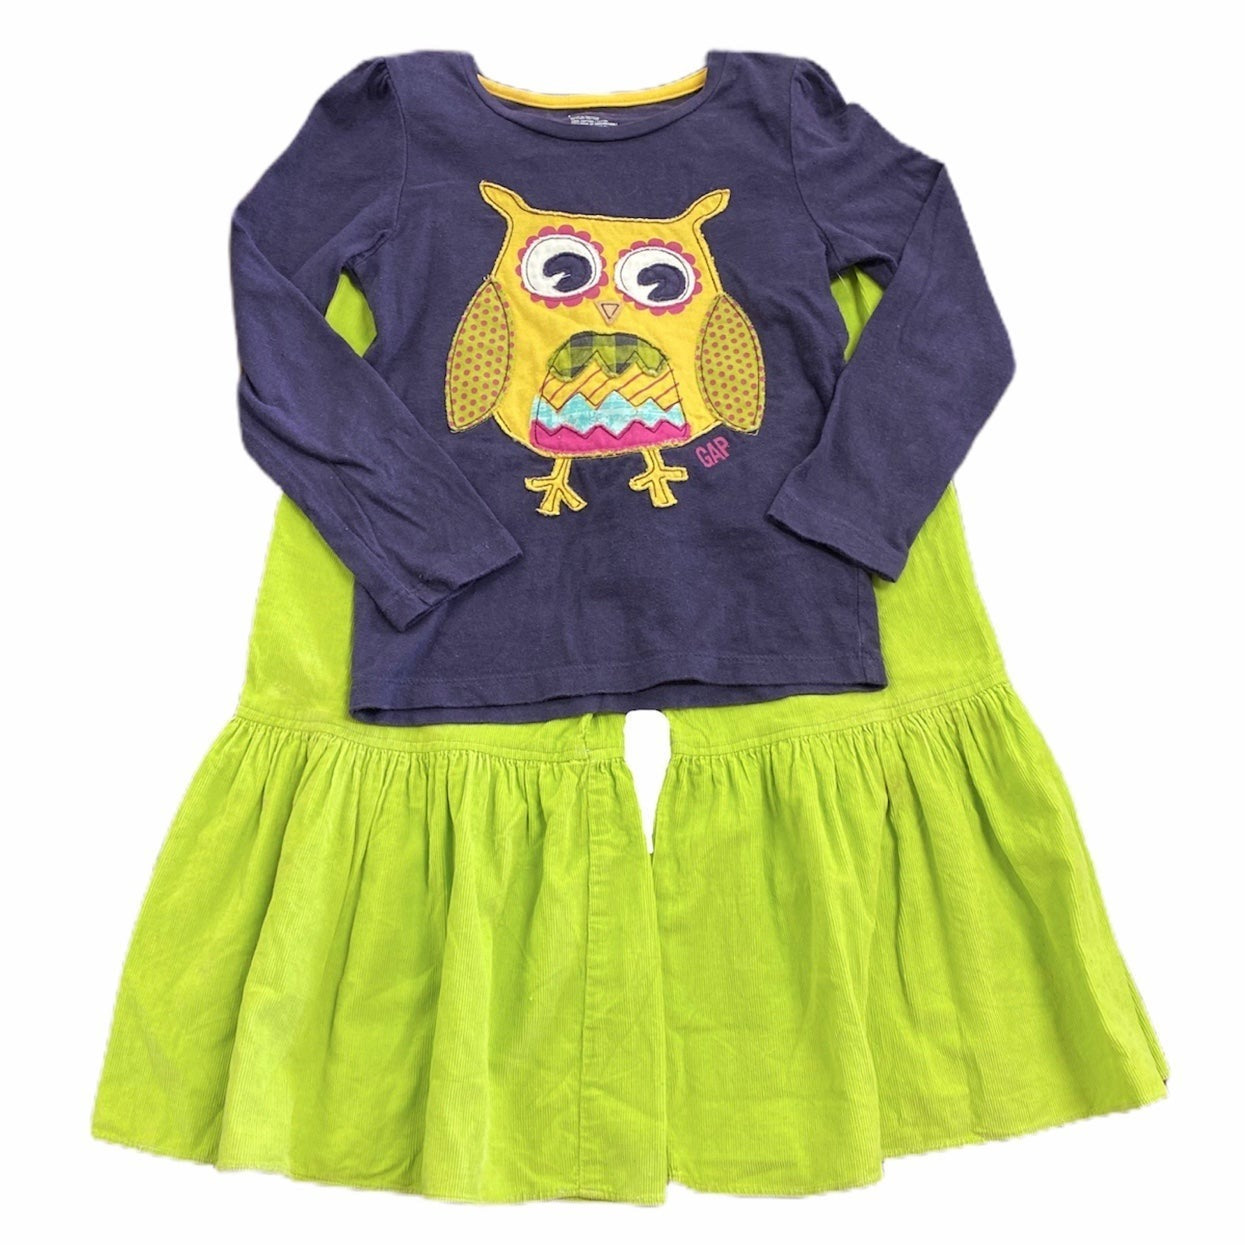 Owl appliqué and ruffle pants bundle Small